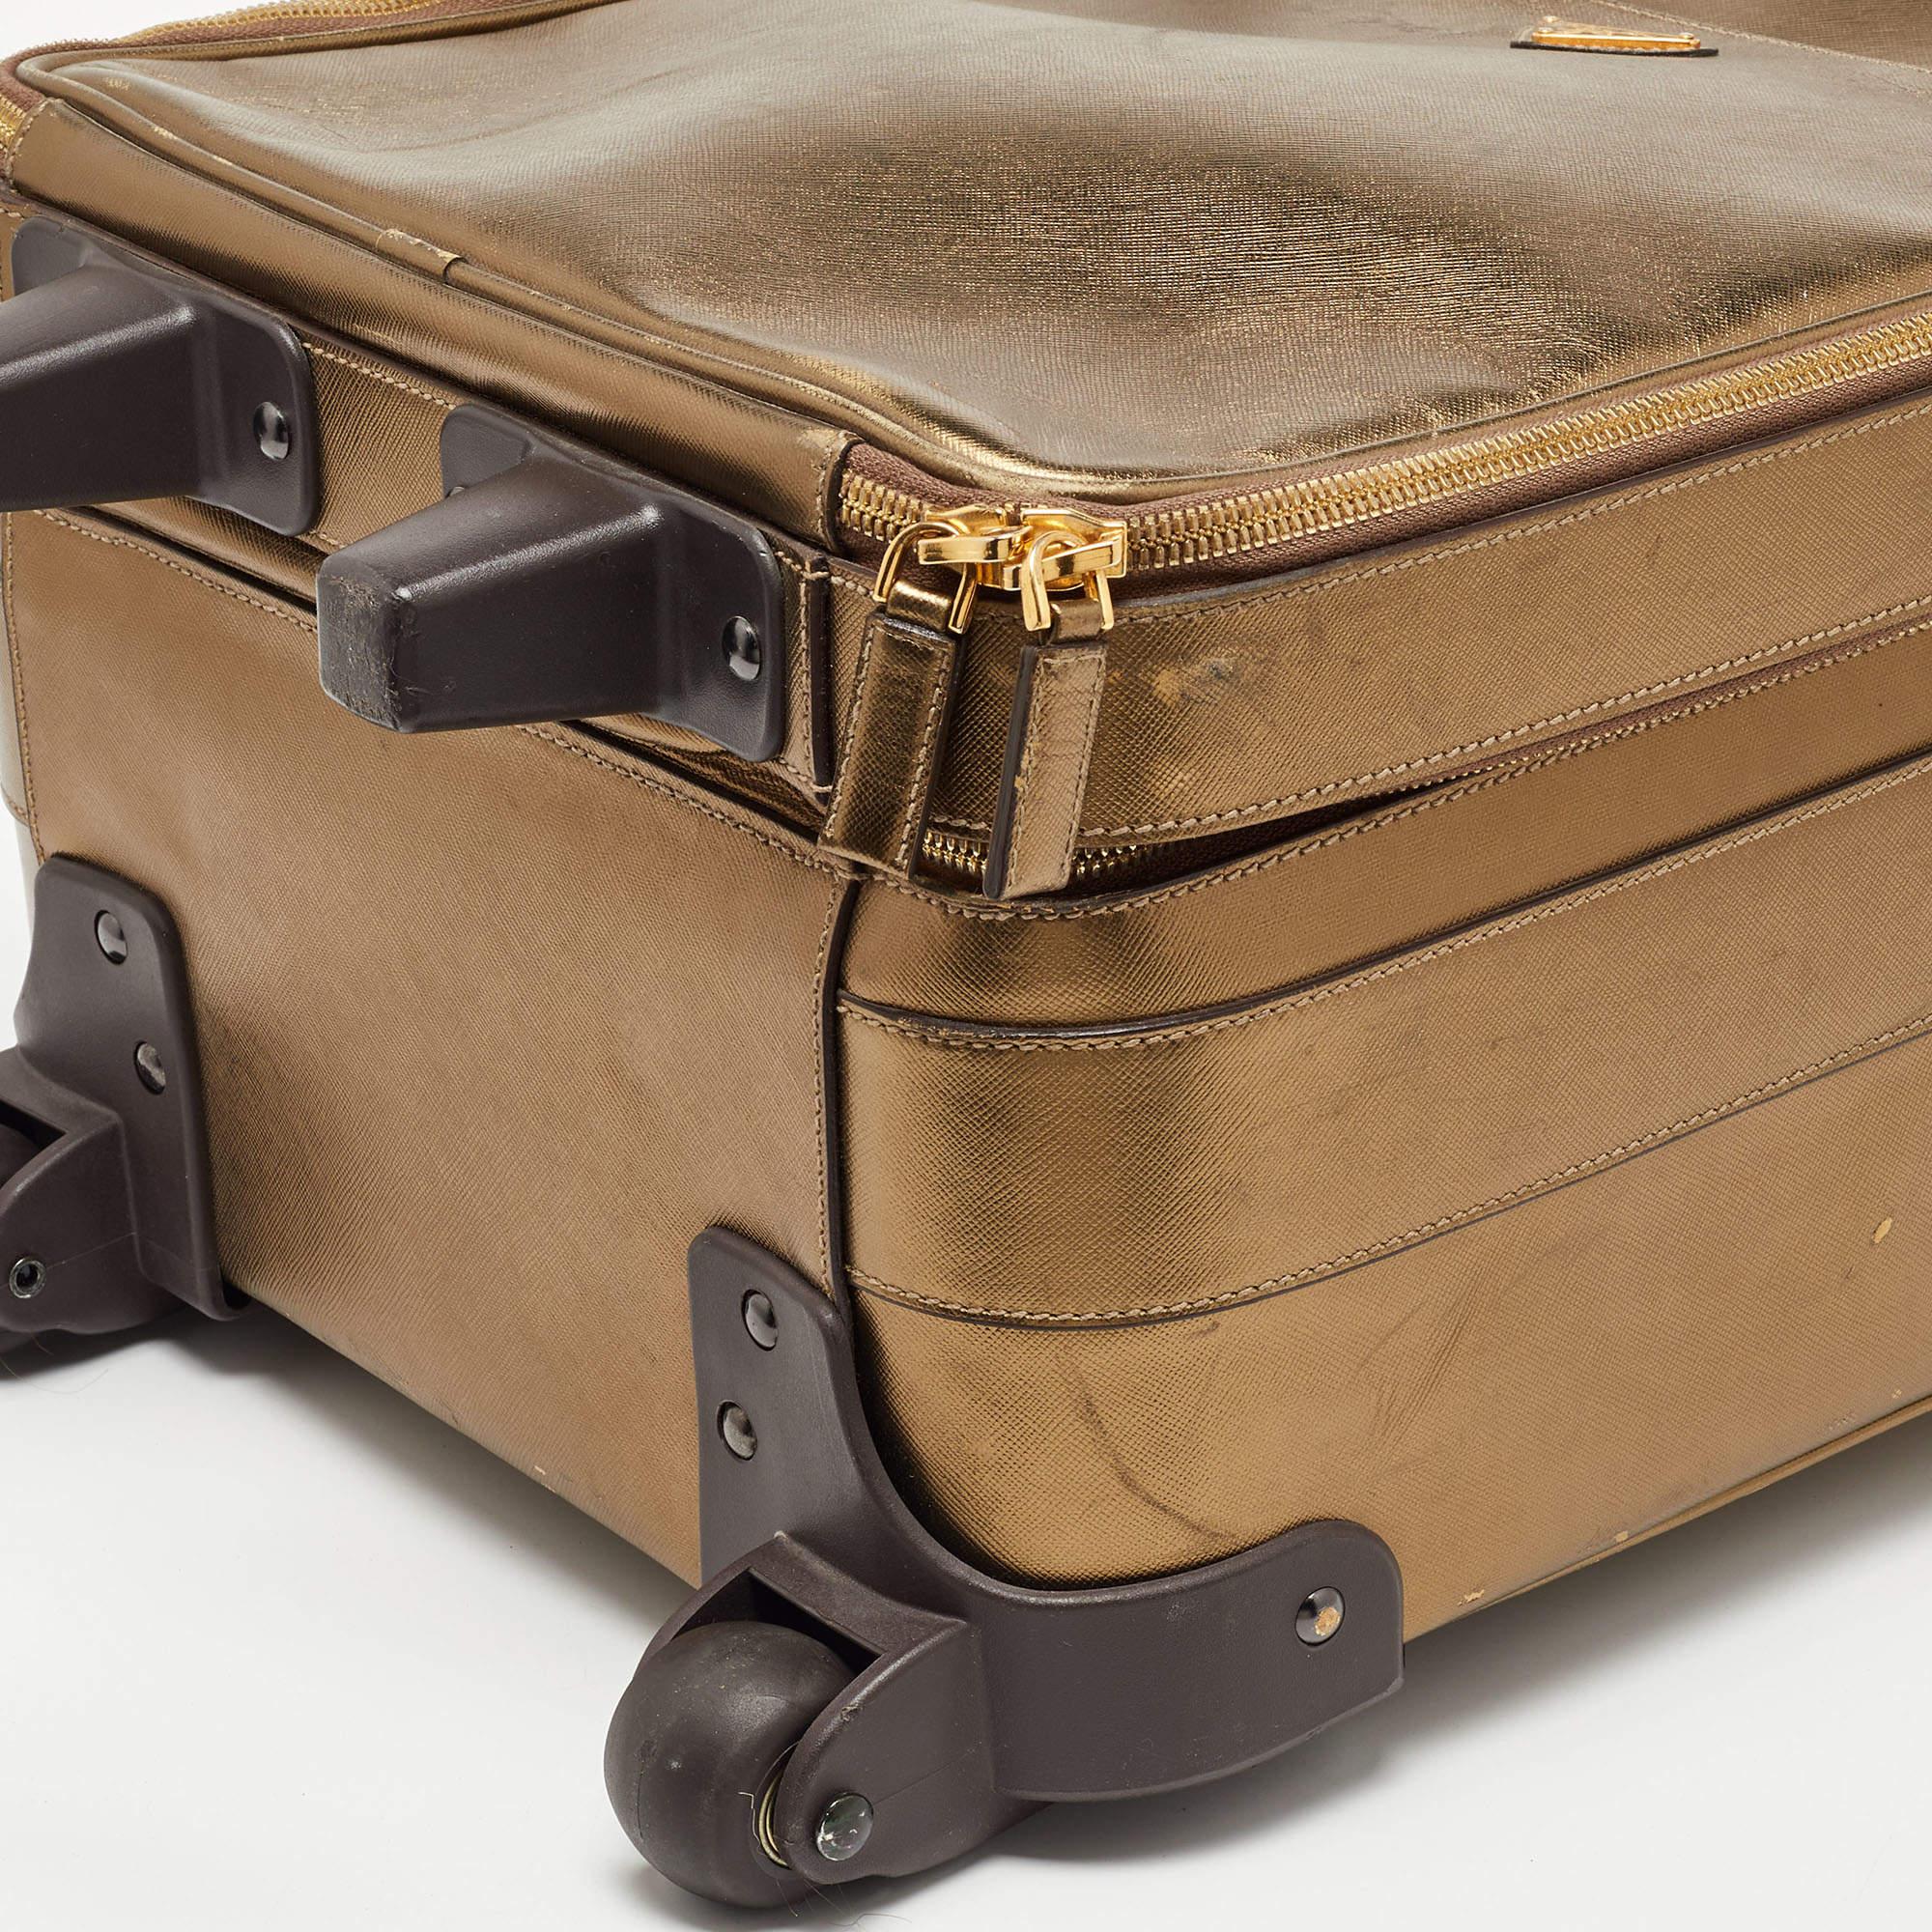 Prada Metallic Gold Saffiano Leather Travel Rolling Trolley Luggage For Sale 3